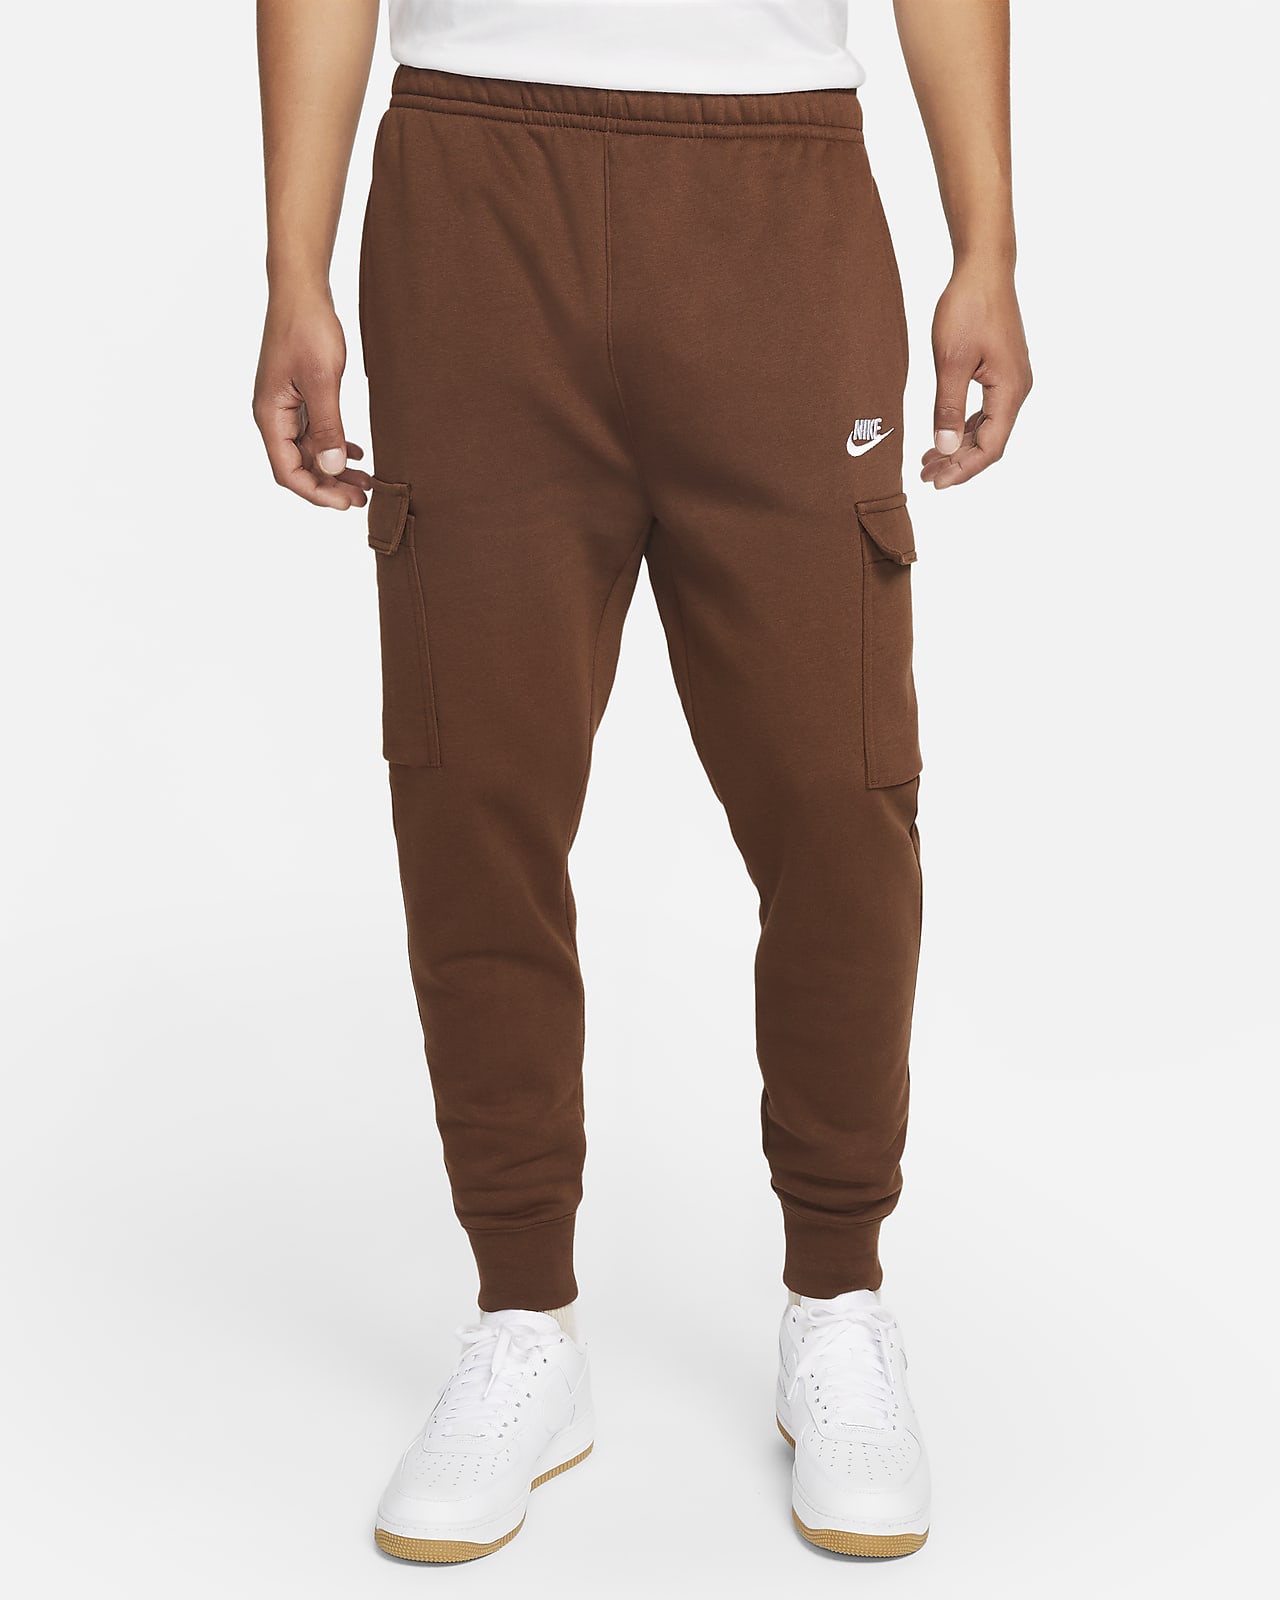 Wrangler Men's Relaxed Fit Flex Cargo Pants - Brown 36x34 : Target